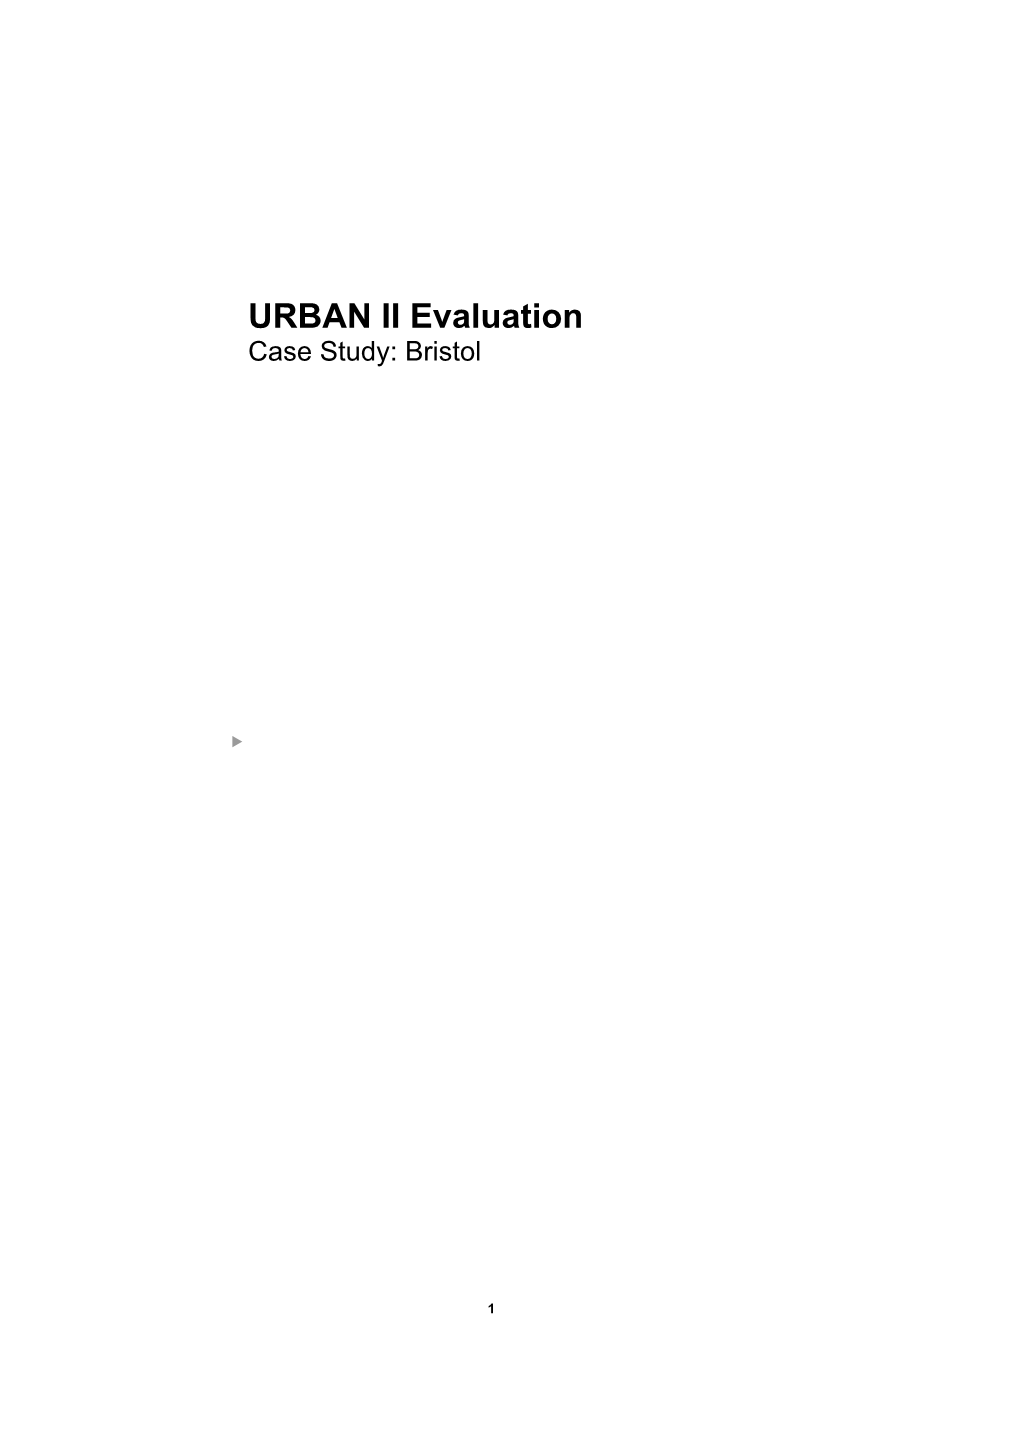 URBAN II Evaluation Case Study: Bristol